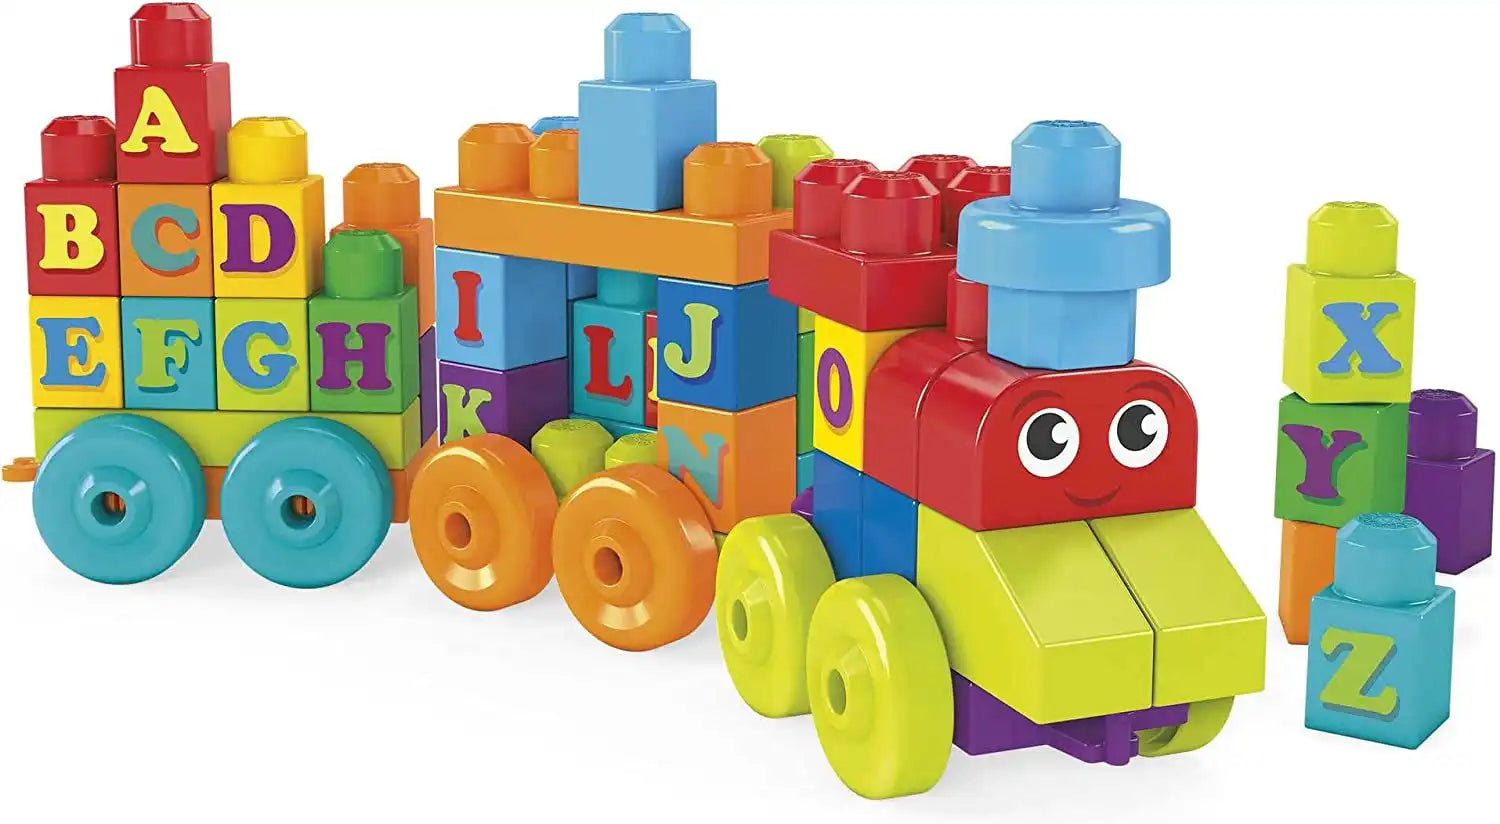 ABC Blocks Building Toy